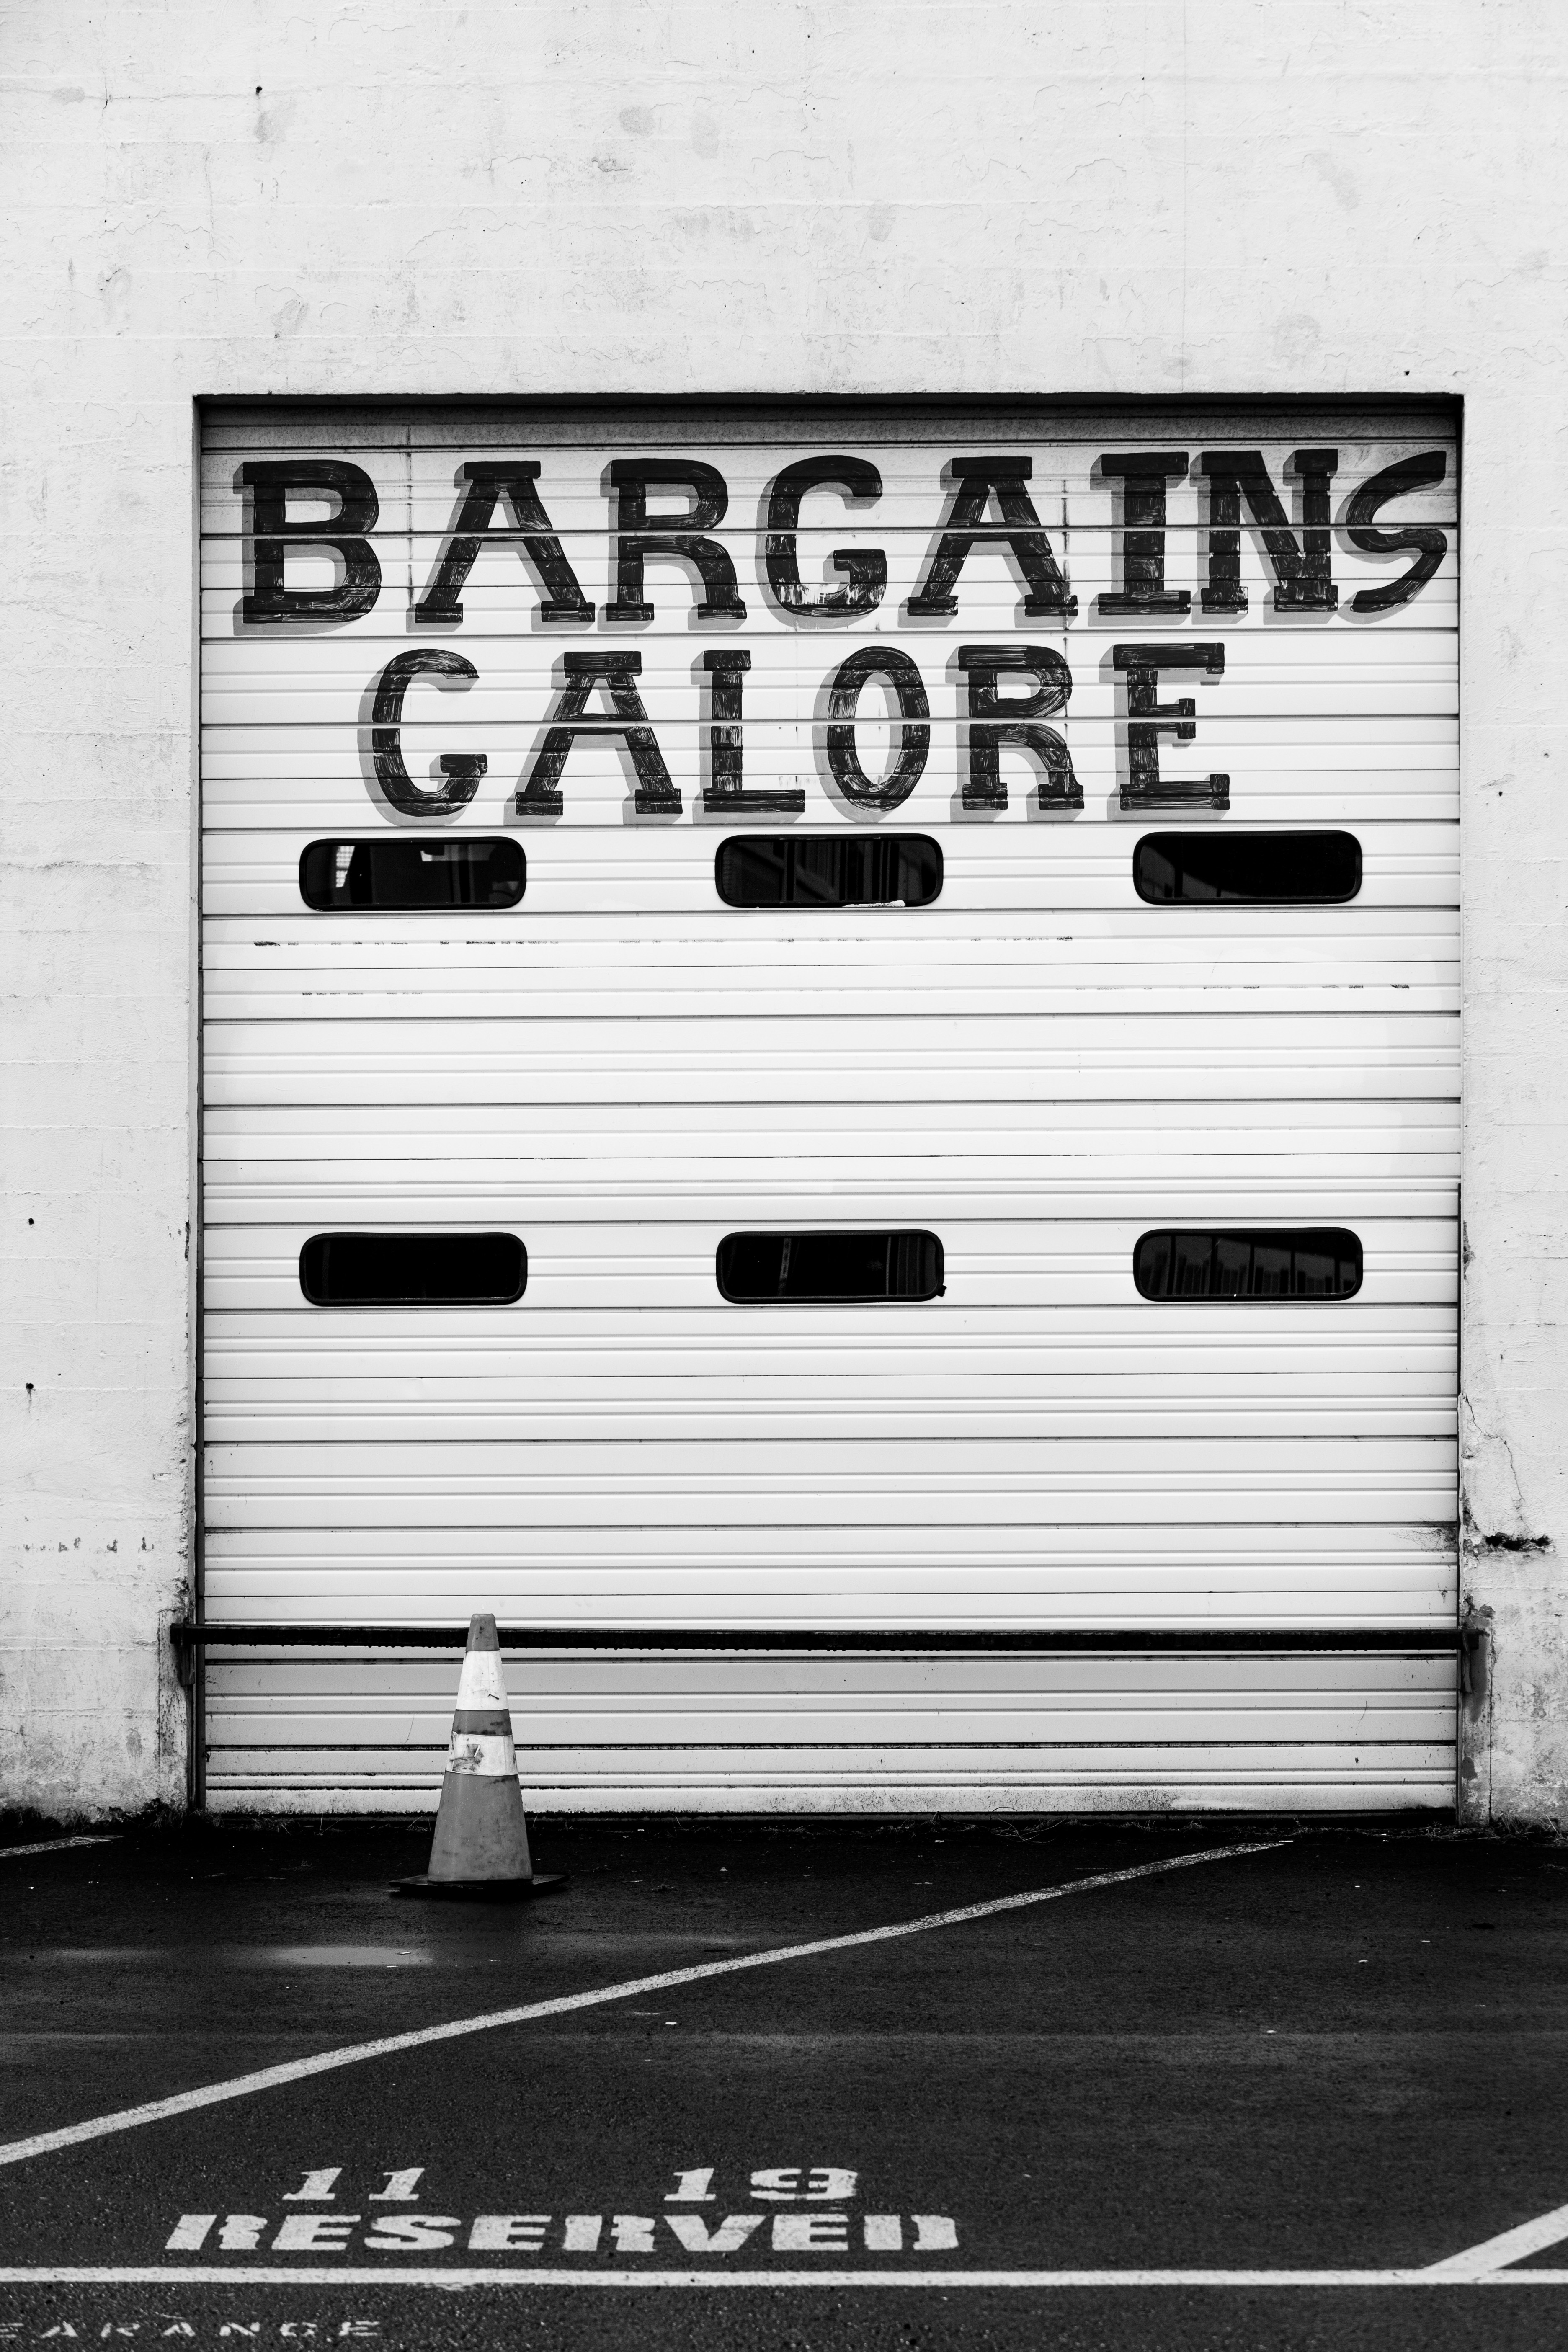 129: Bargains Galore